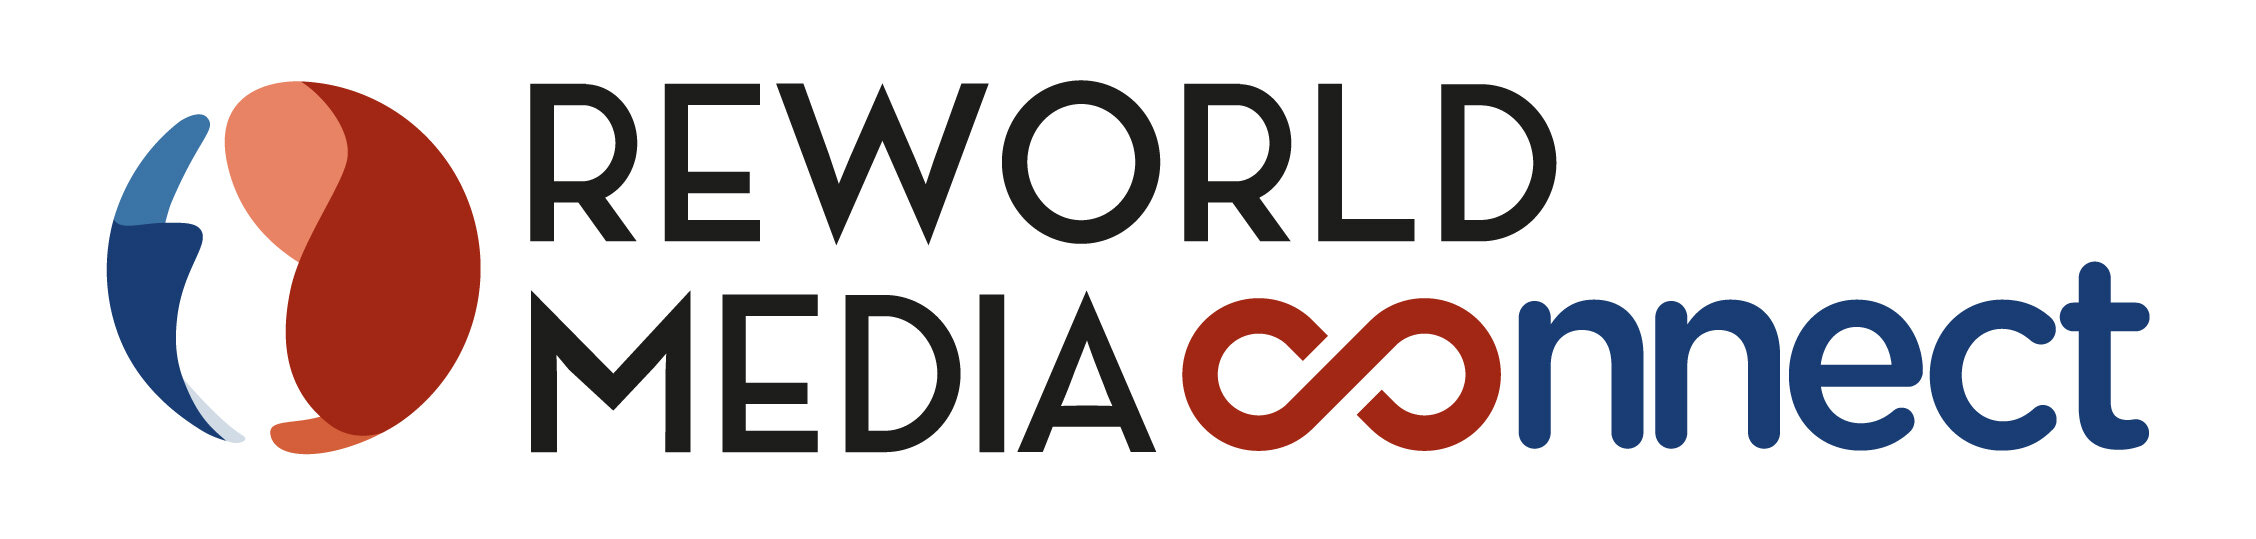 Reworld-MediaConnect-logo